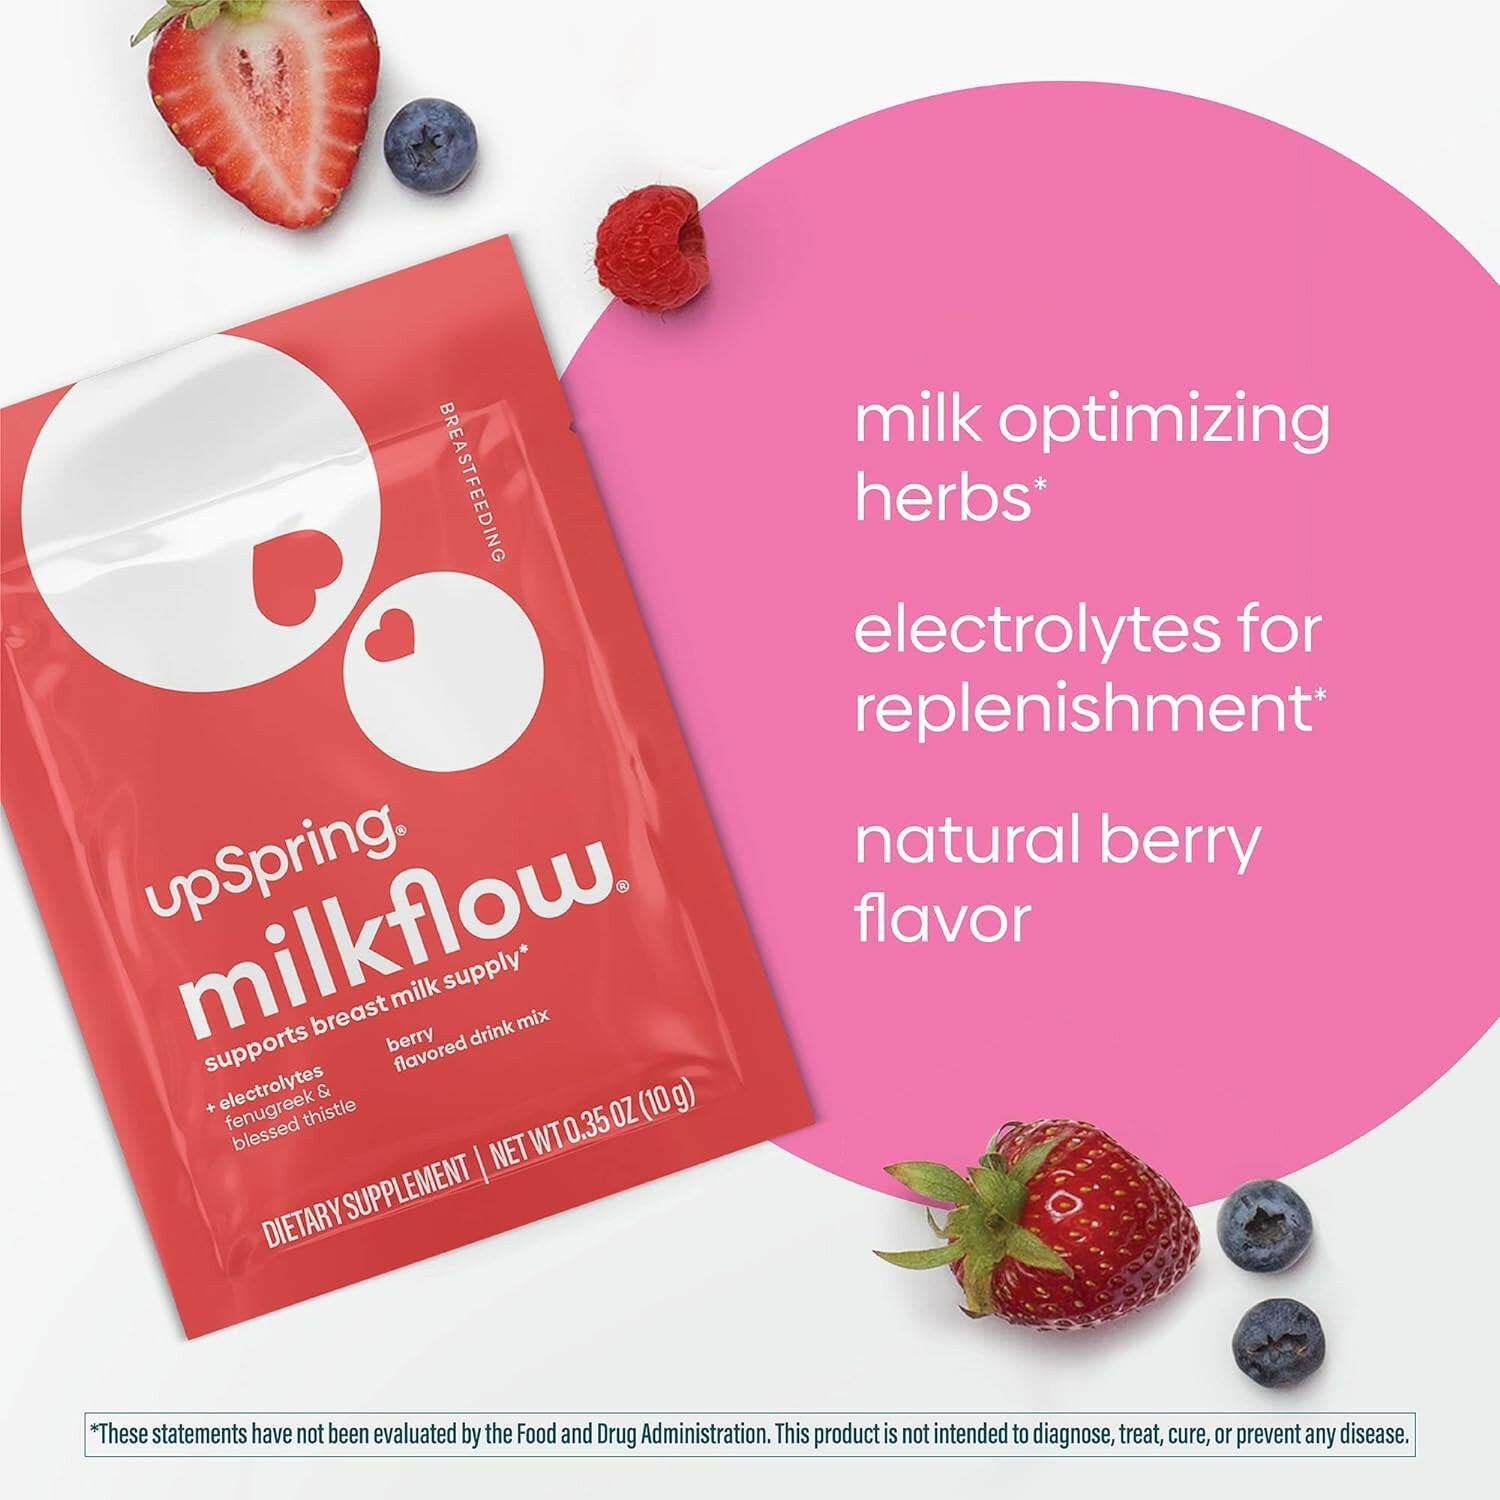 UpSpring Milkflow Electrolyte Breastfeeding Supplement Drink Mix with Fenugreek, Berry Flavor, 16 Drink Mixes